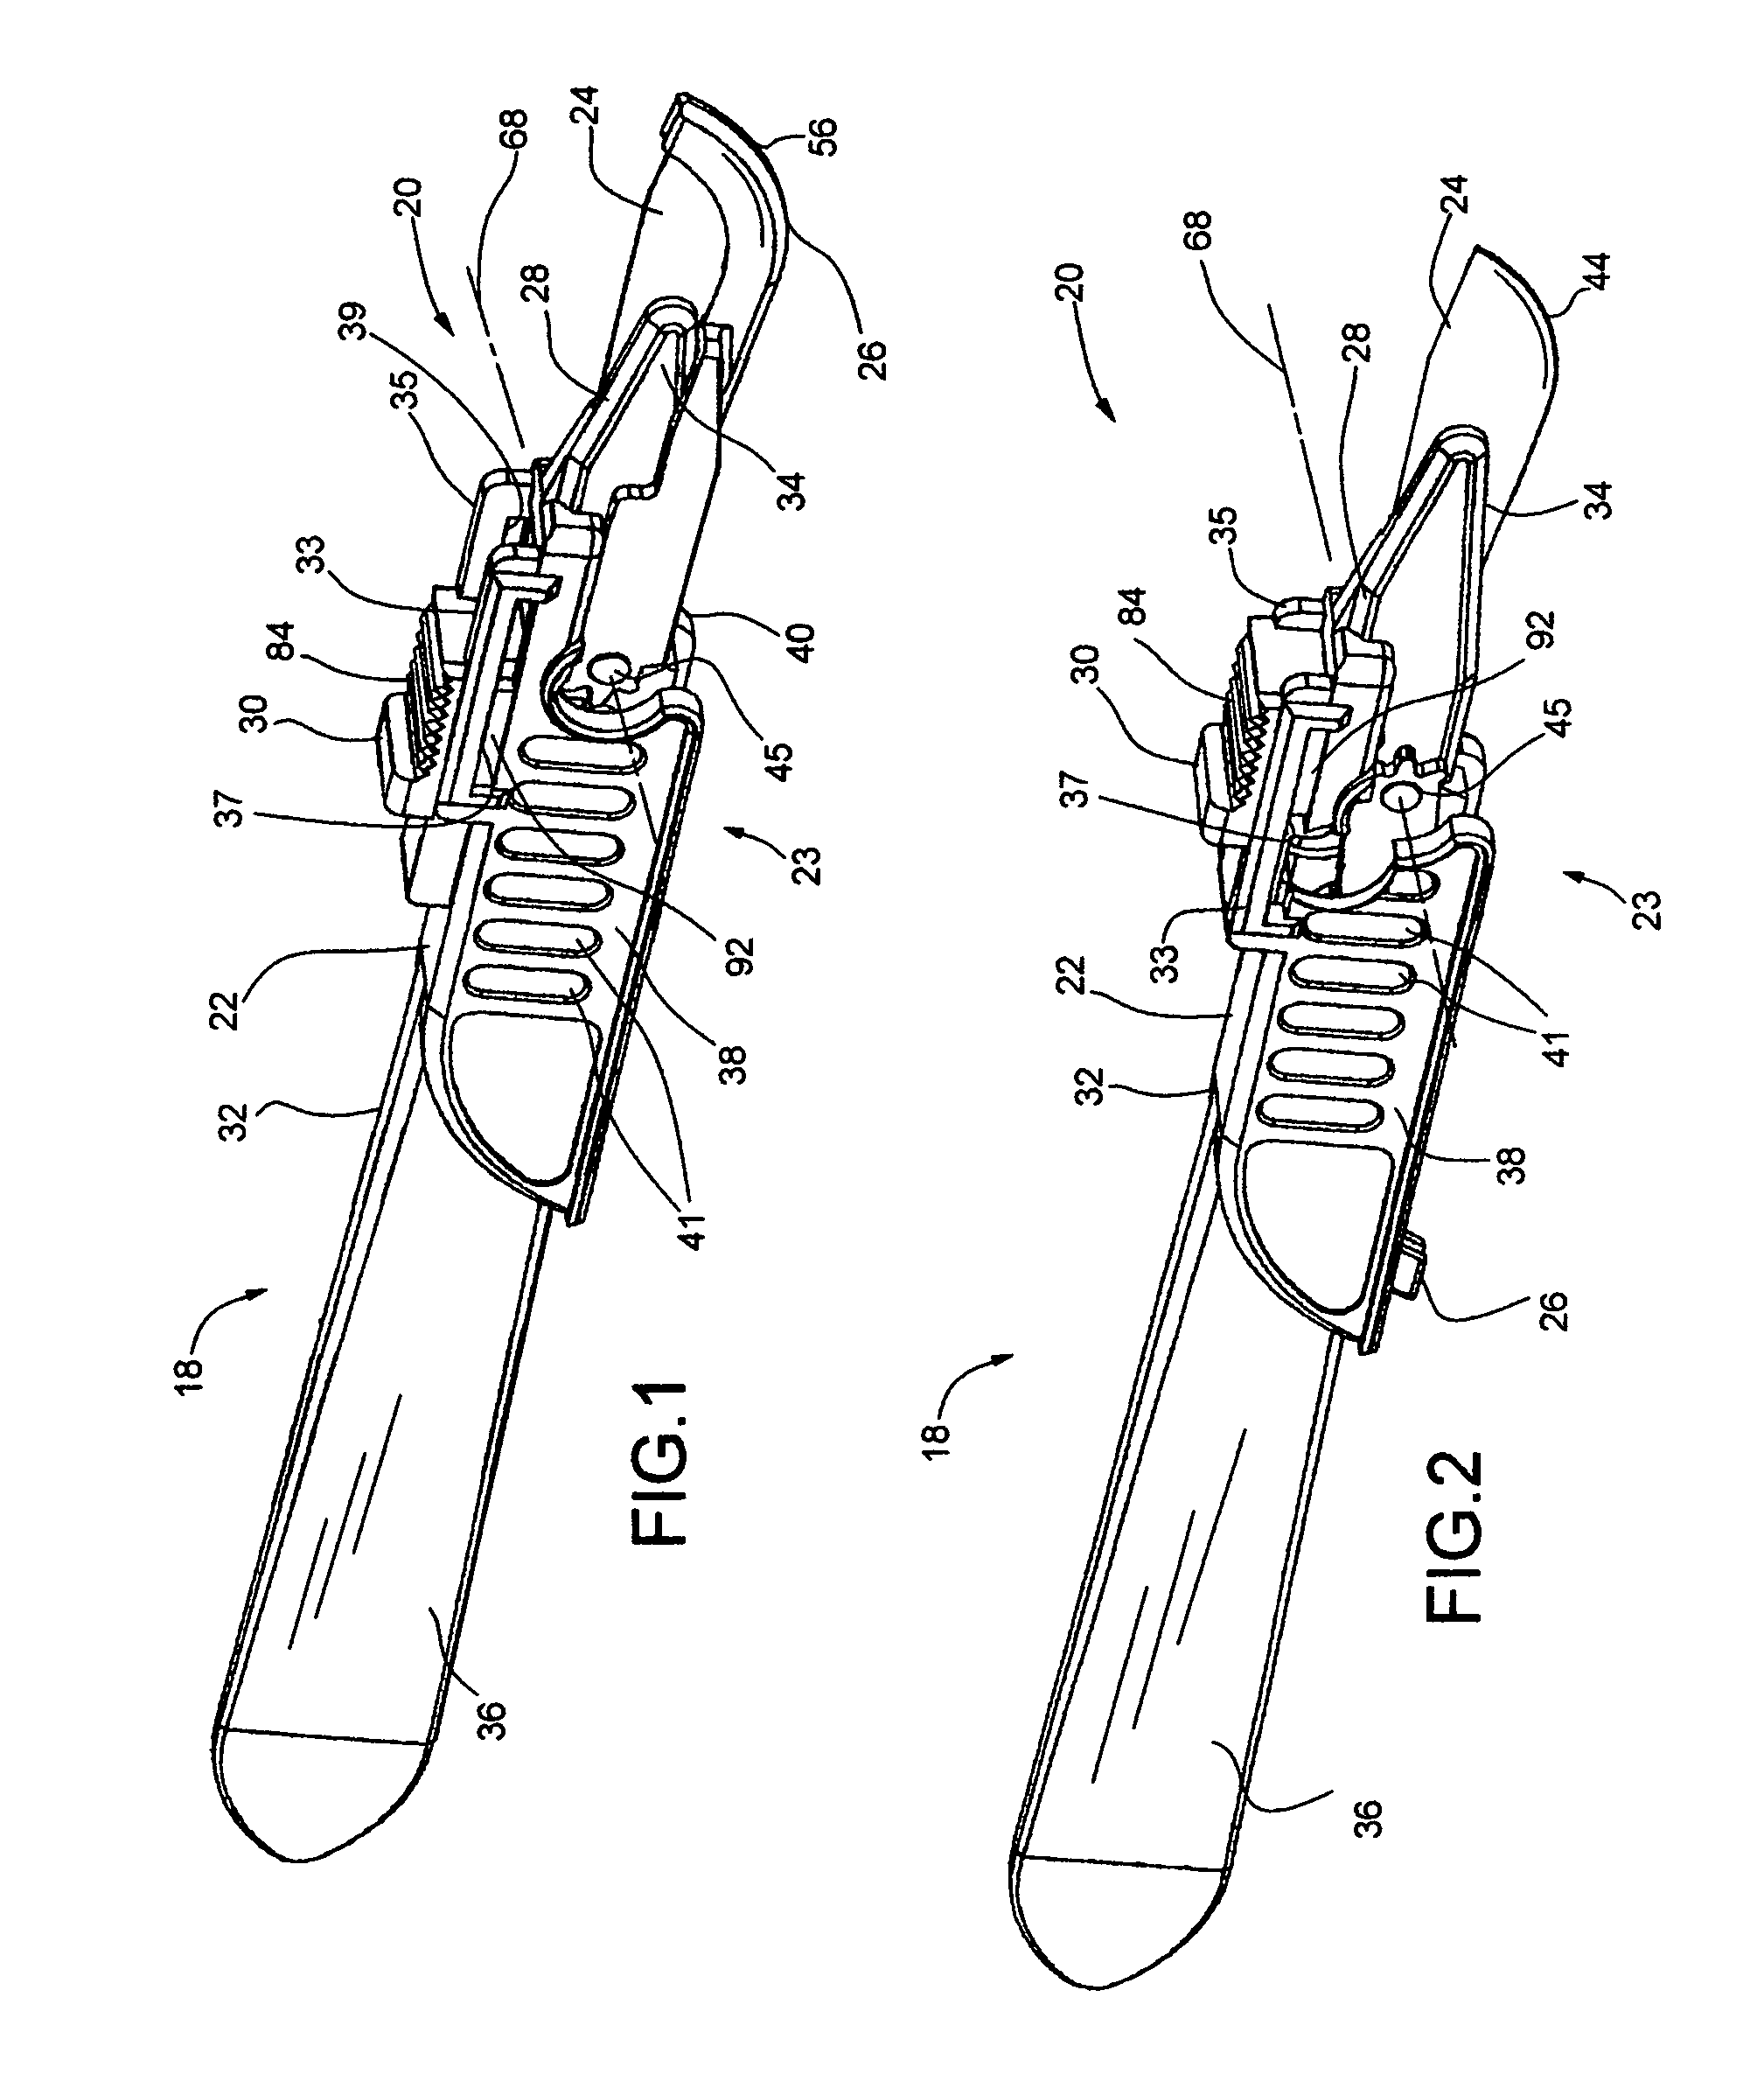 Scalpel handle having a blade shield utilizing over center spring